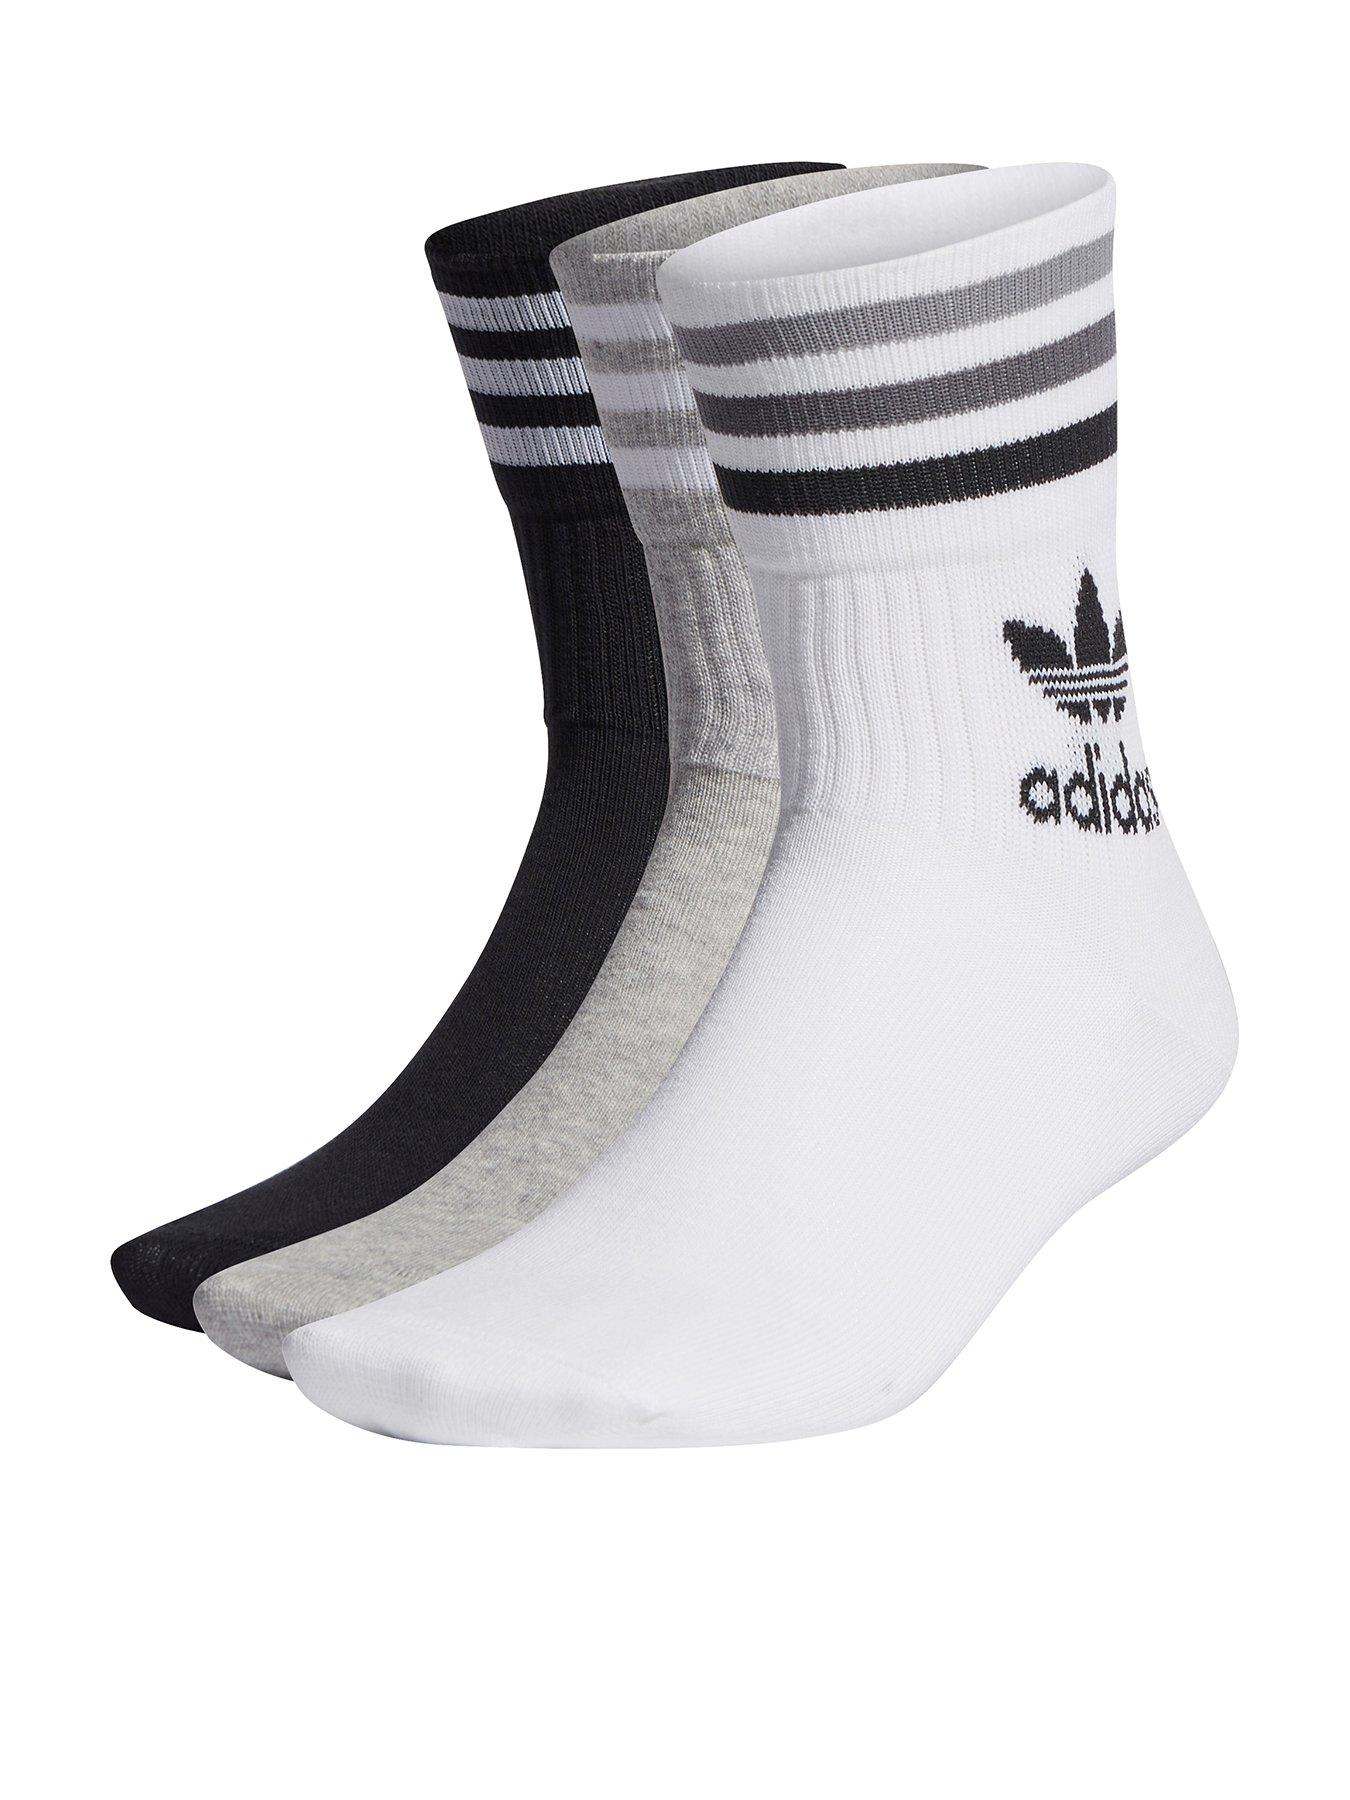 Dot Star Patch Prints on Black Trainer Socks Size: 4-7 3 PACK